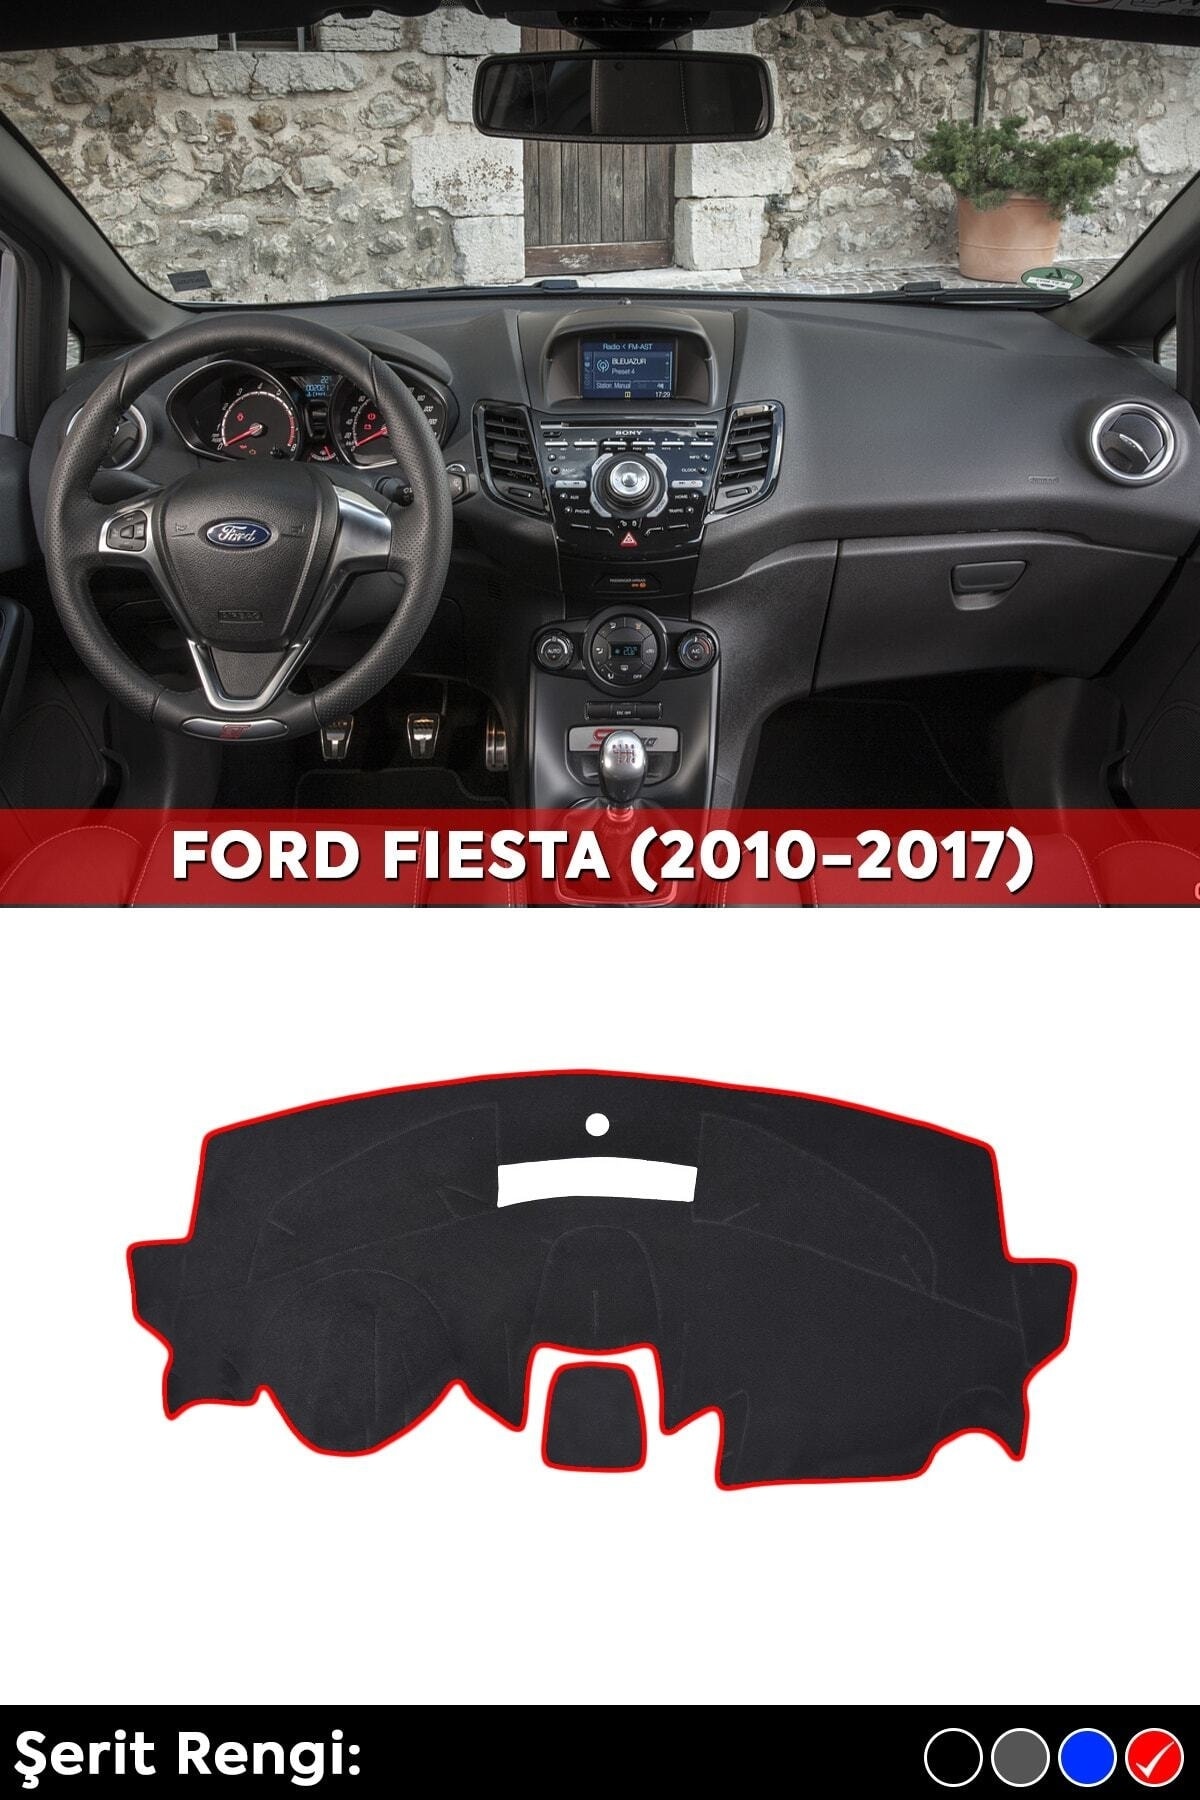 sergul store Ford Fıesta (2010-2017) Model Uyumlu 3d Torpido Kılıfı Panel Koruyucu Göğüs Kaplama - Kırmızı Şerit